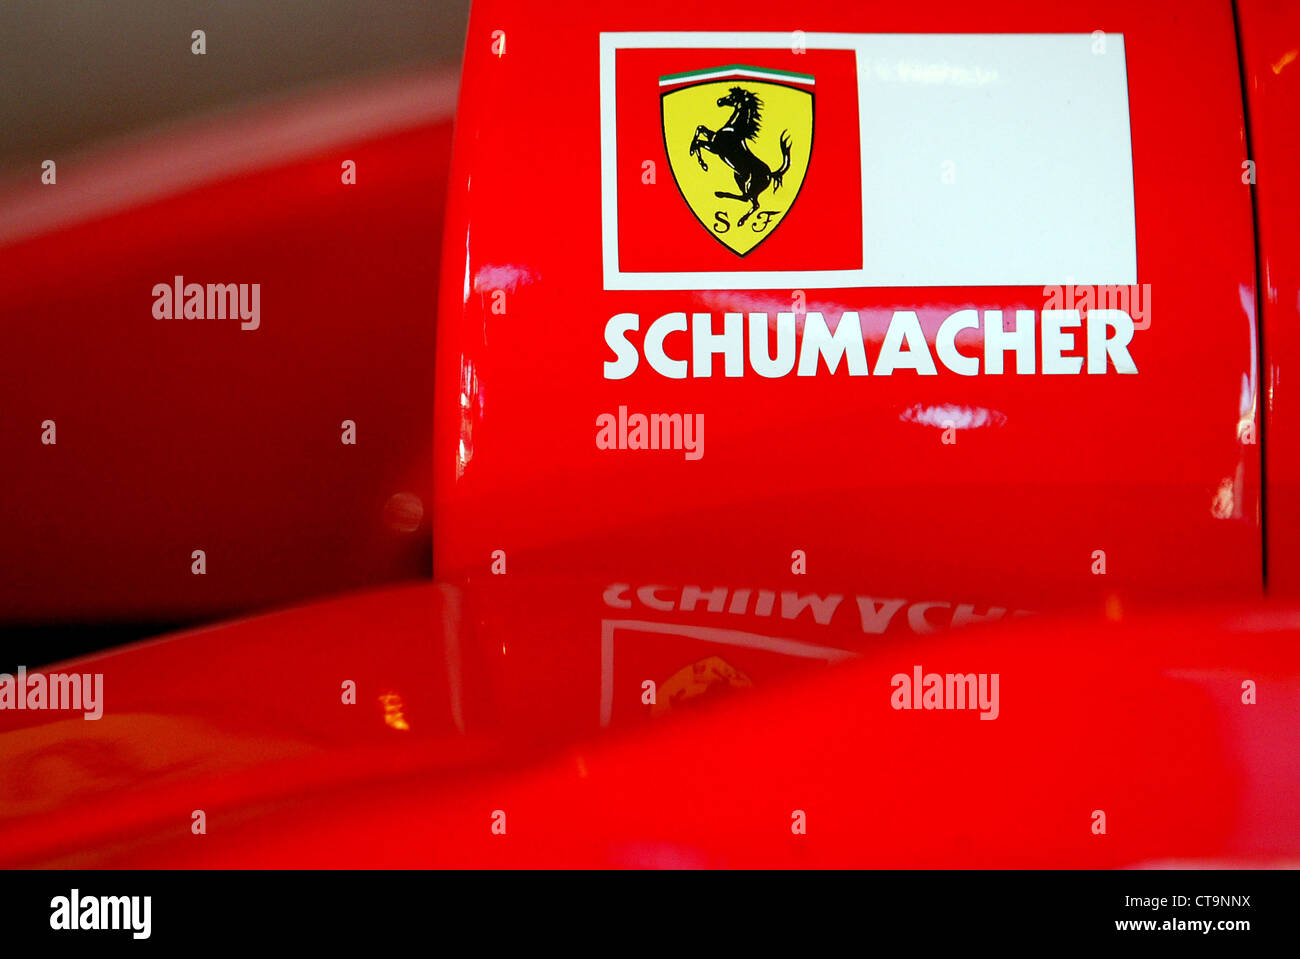 Detail of M. Schumacher Ferrari 2002 season Stock Photo